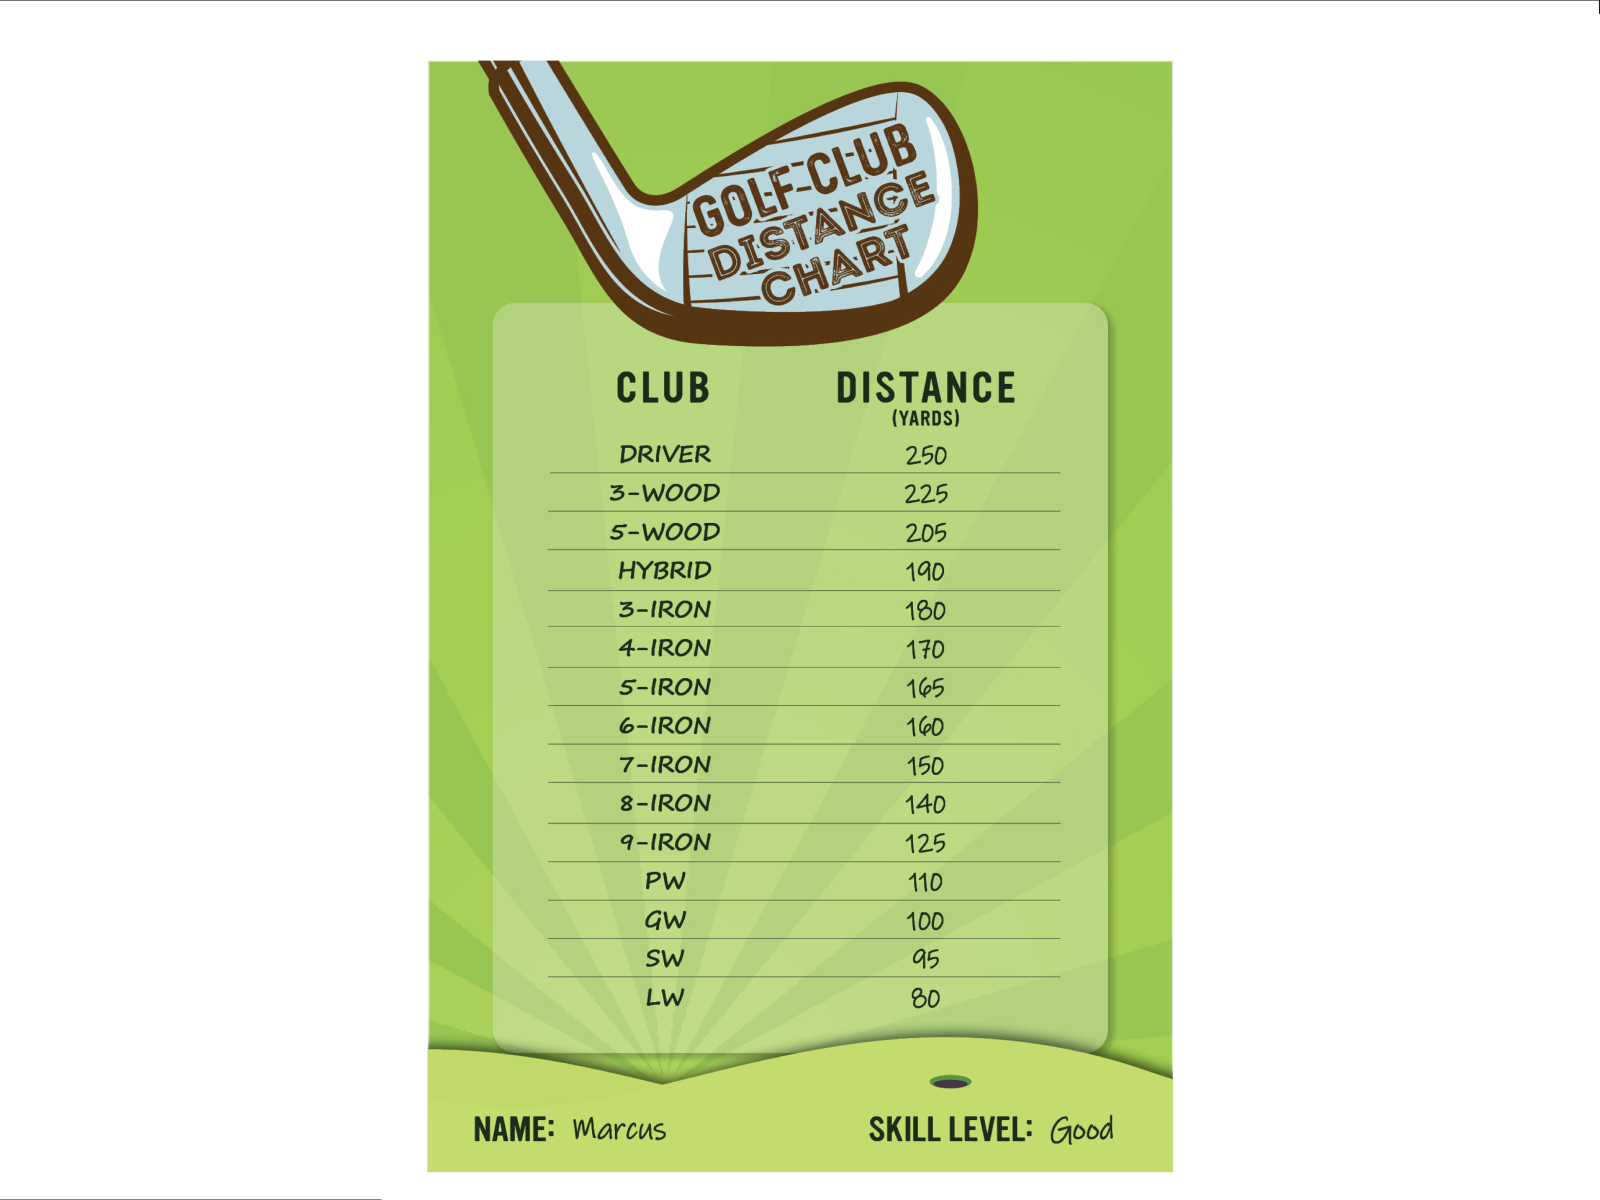 golf-club-distance-chart-by-alyssa-cerone-on-dribbble